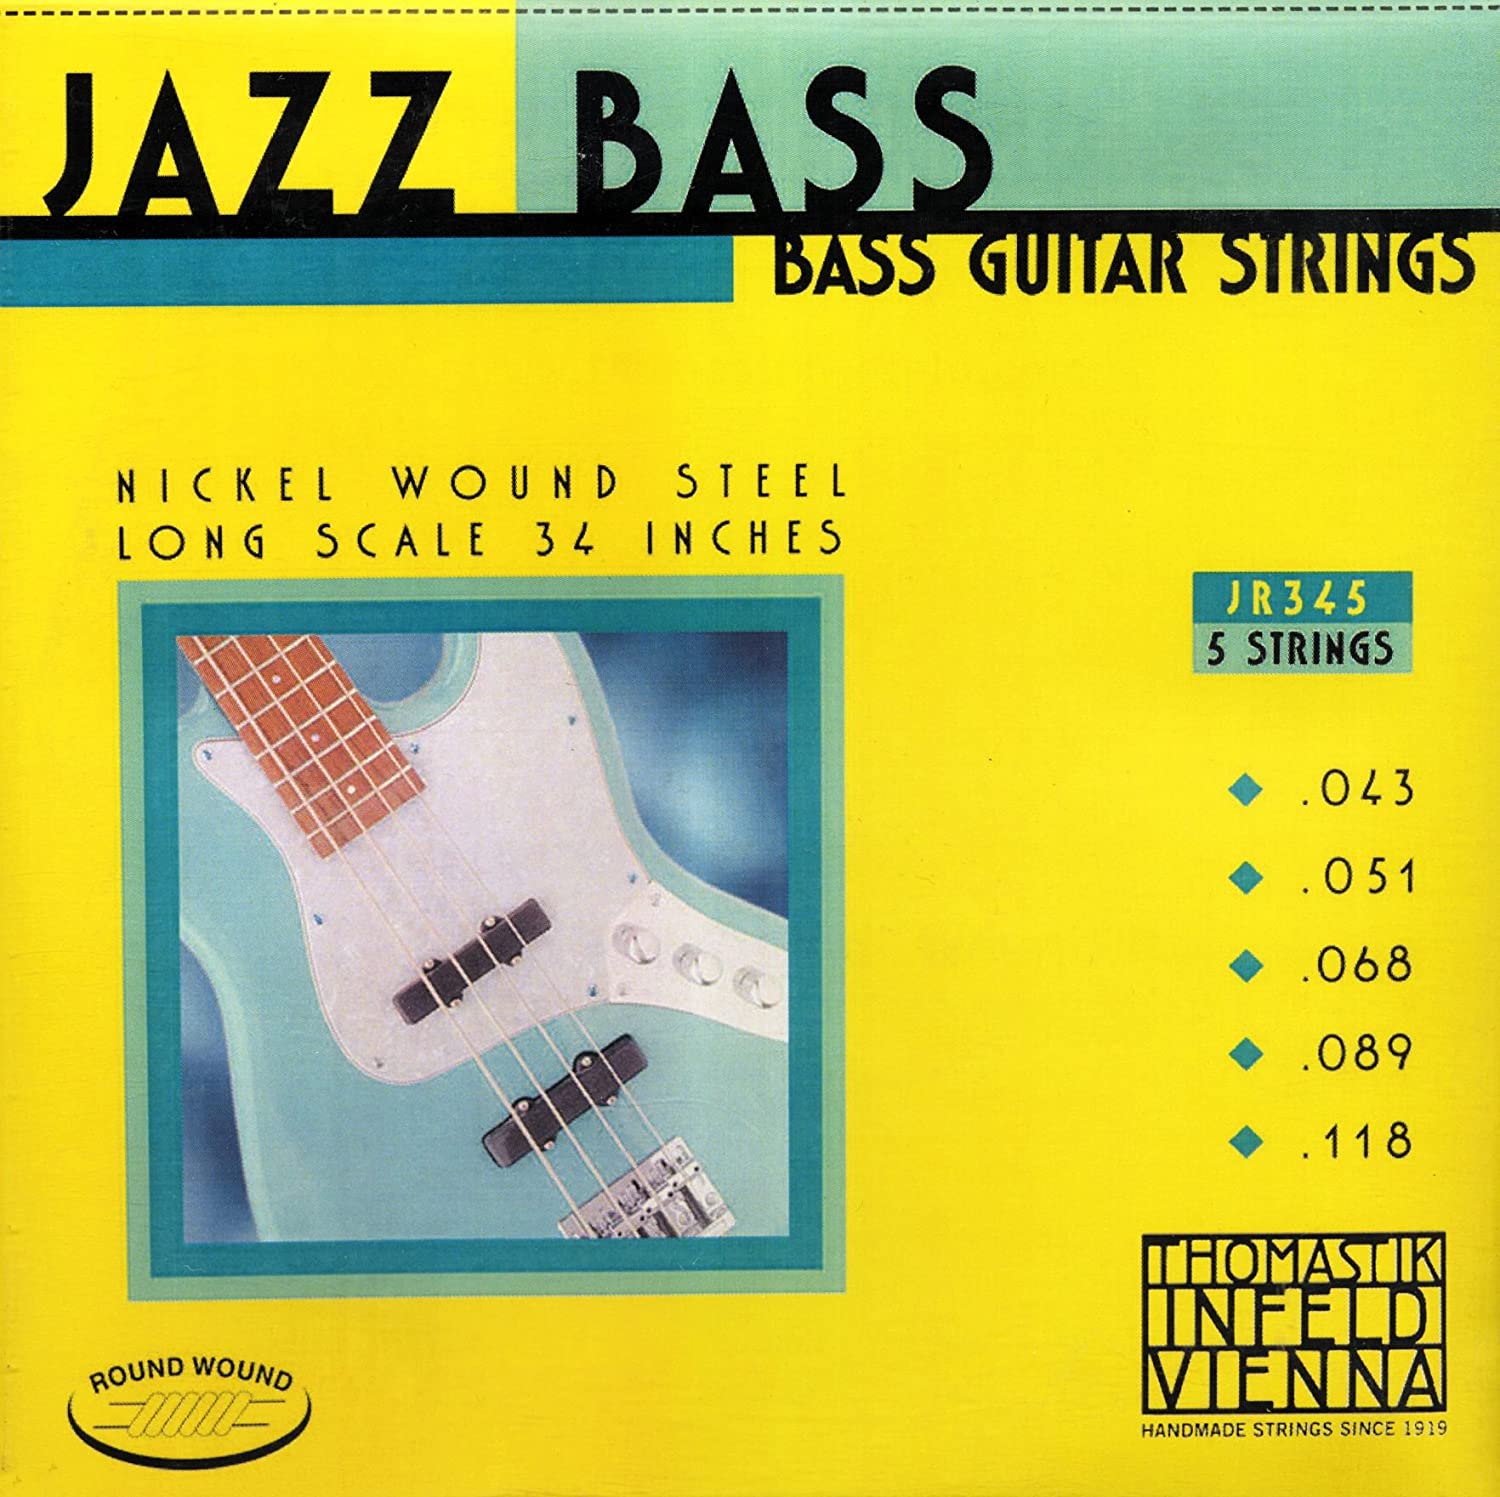 Thomastik-Infeld Bass Guitar Strings on a white background